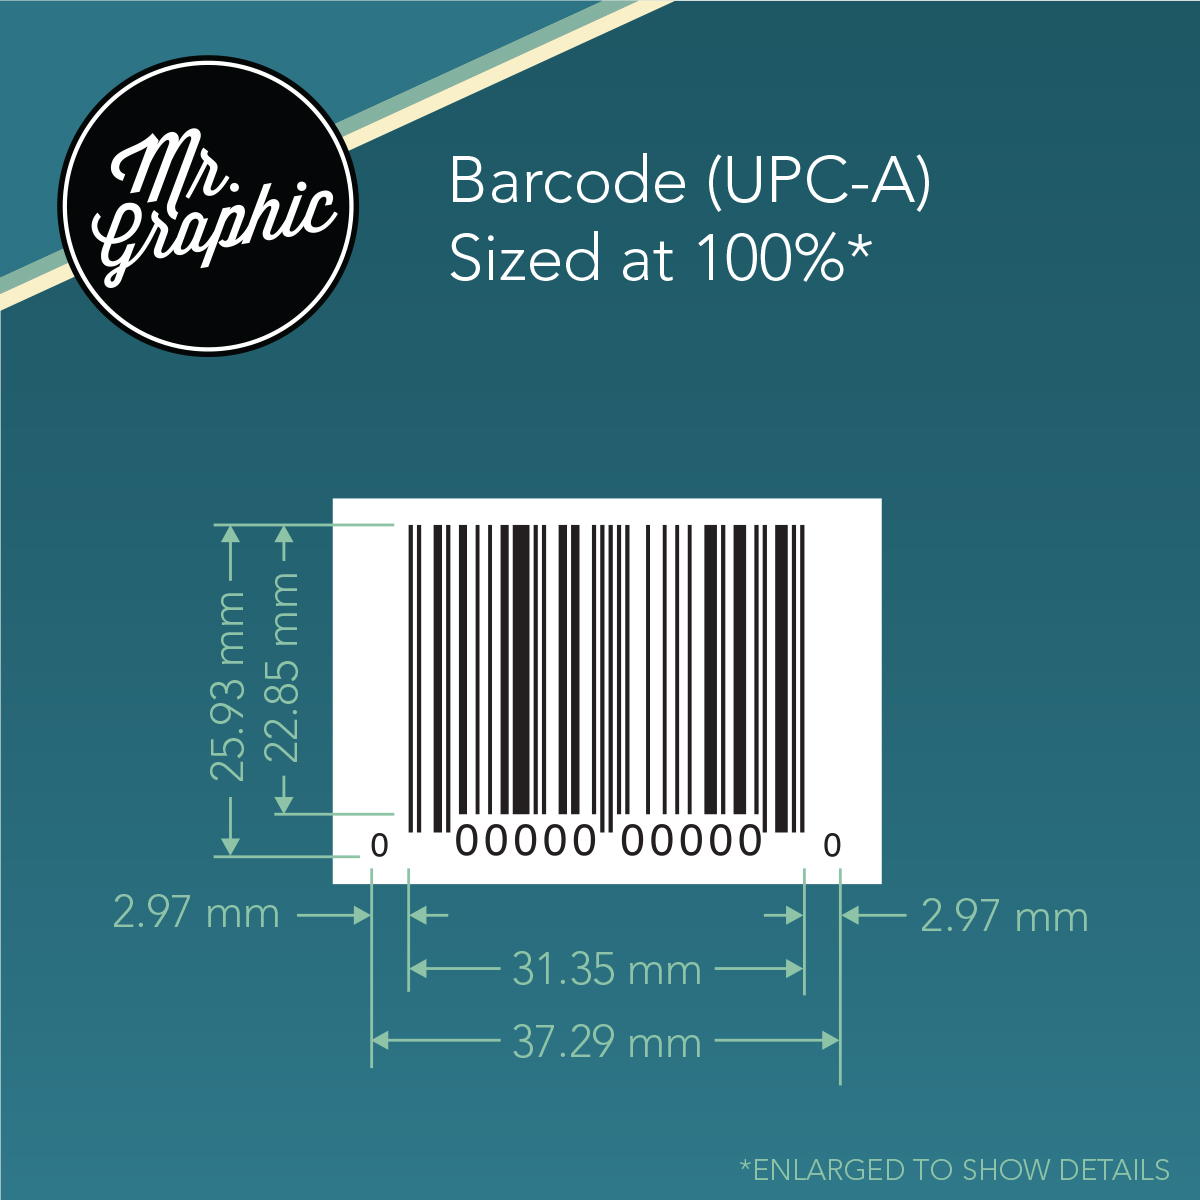 Barcode Sized at 100% (UPC-A)